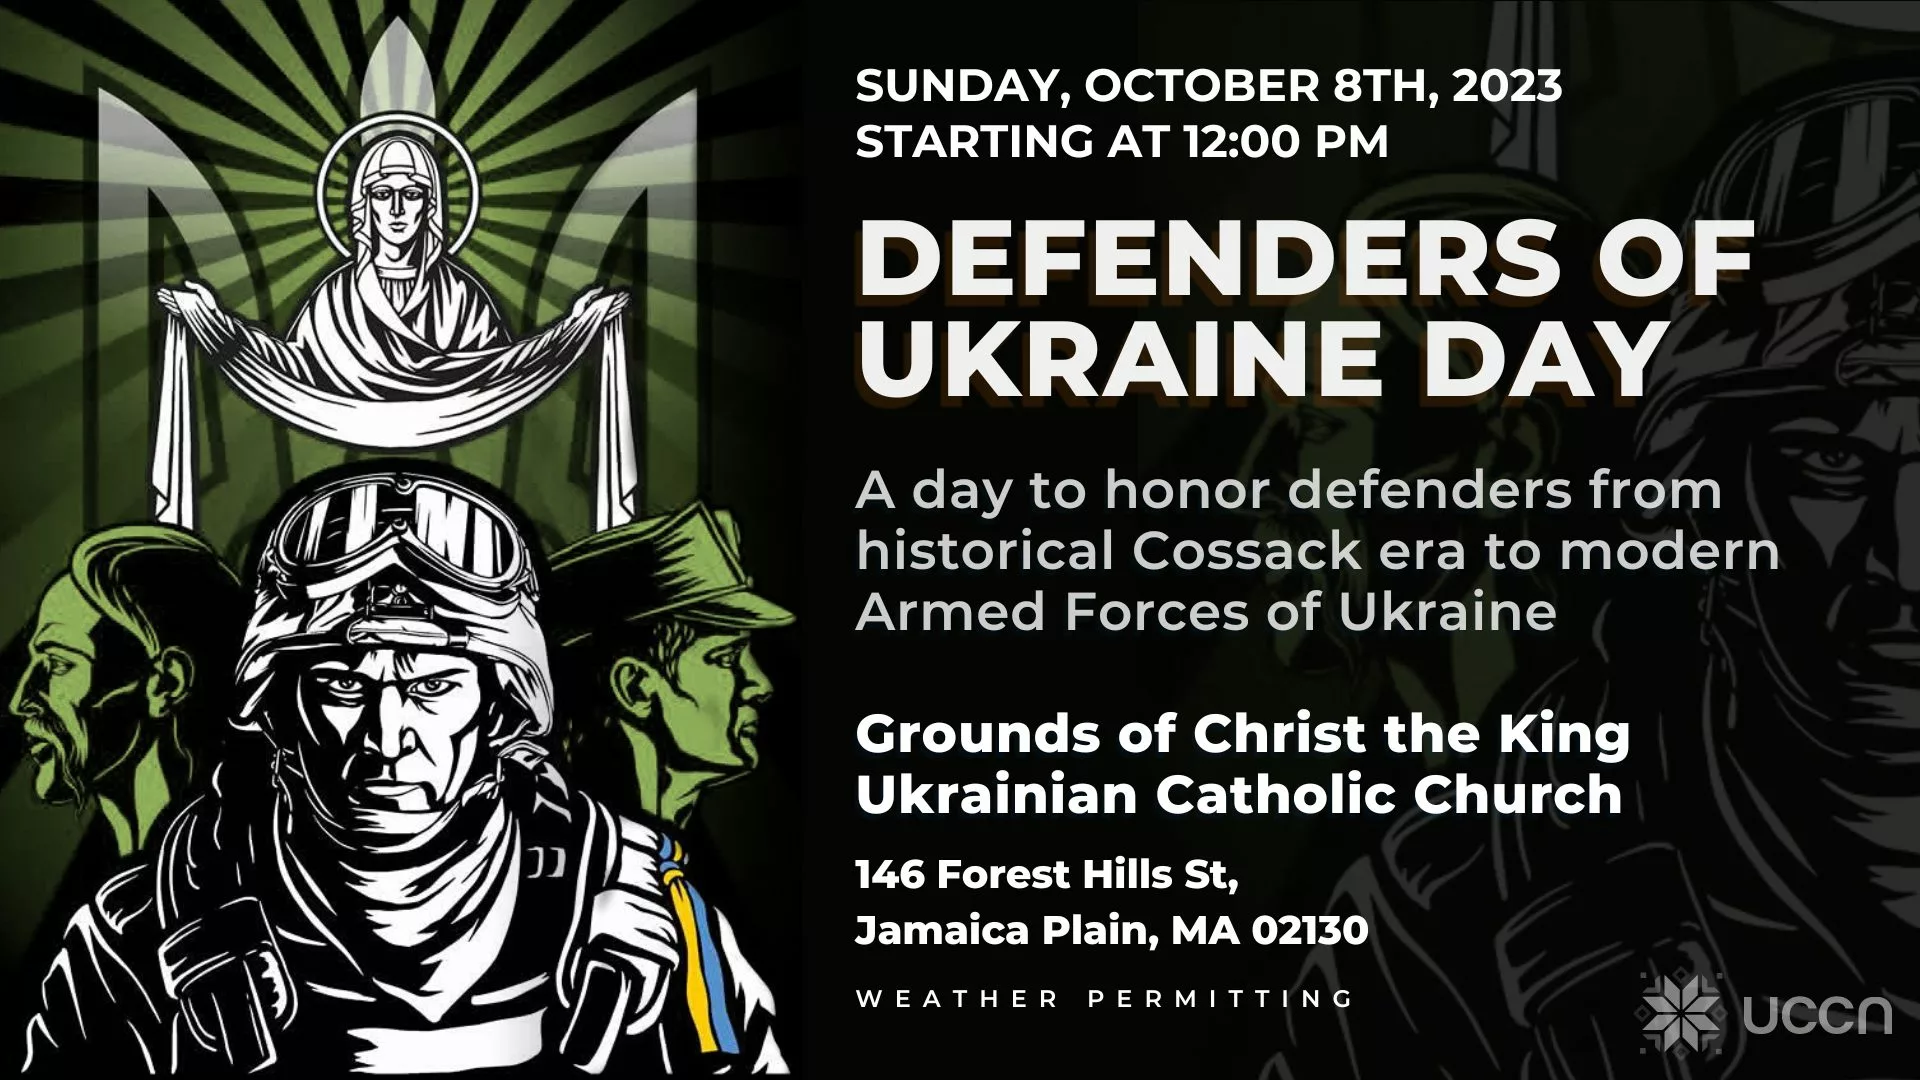 Honoring DEFENDERS OF UKRAINE DAY in Boston